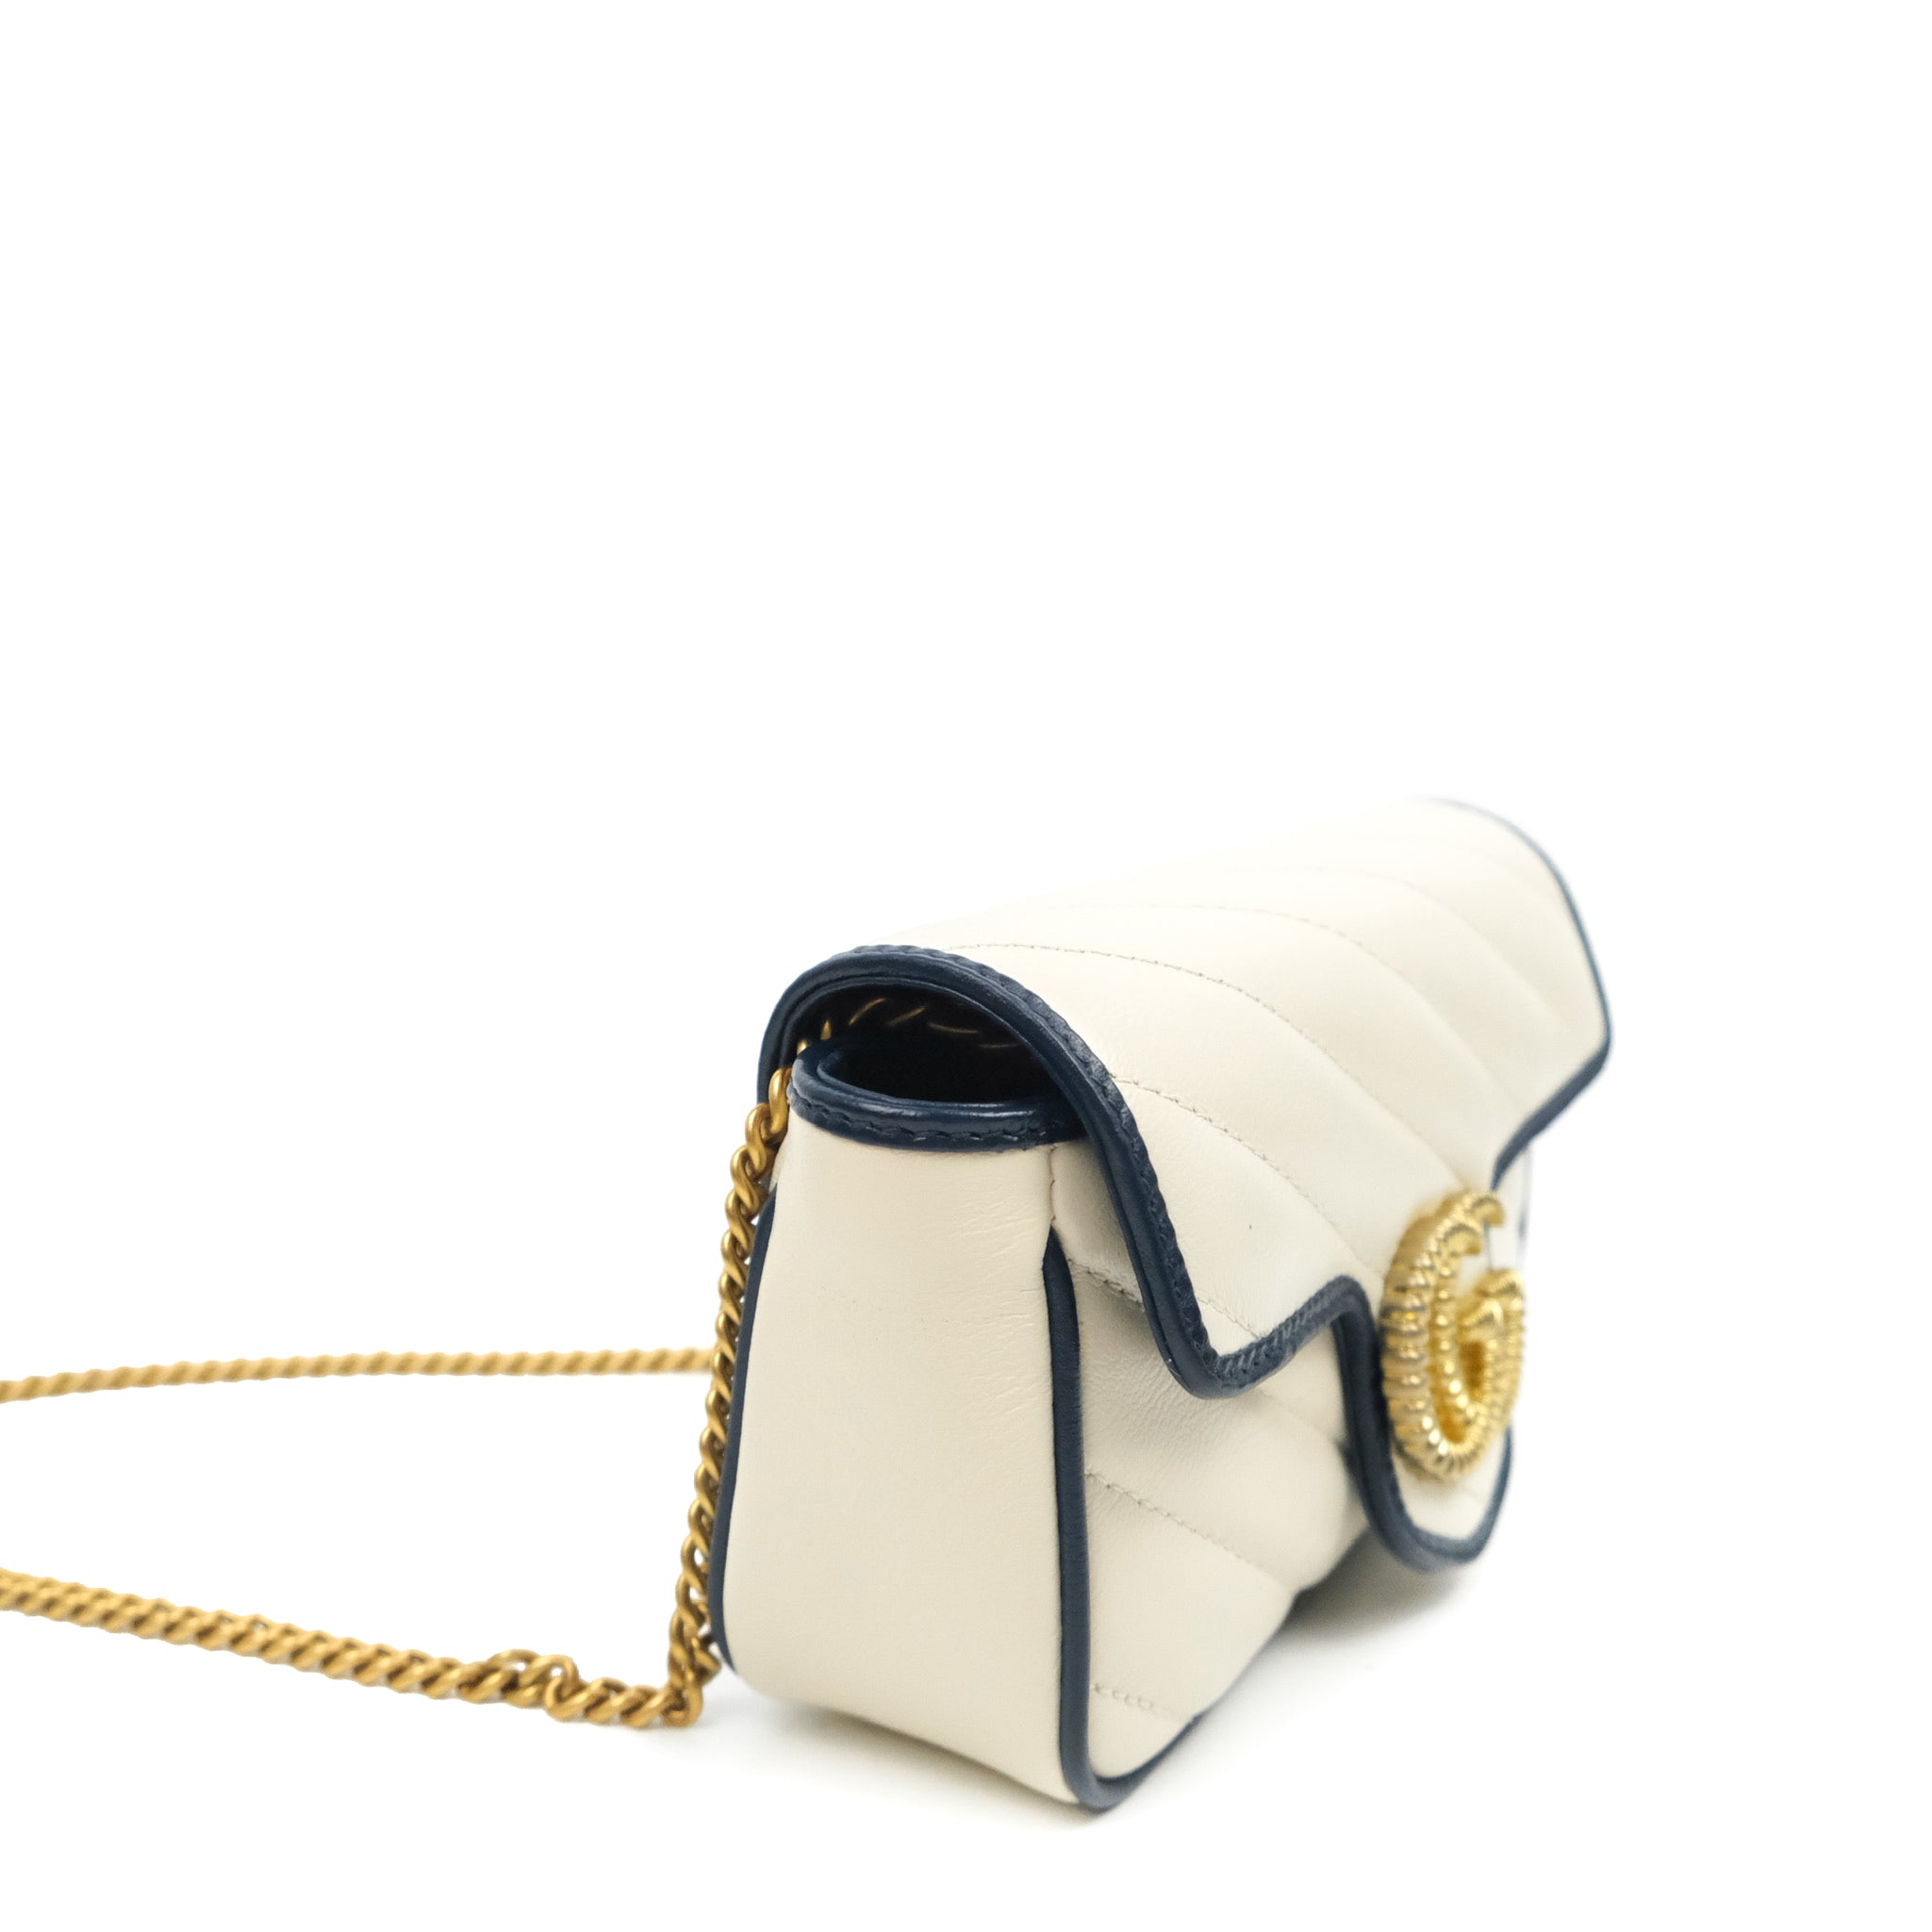 GG Marmont matelassé chain mini bag in white leather